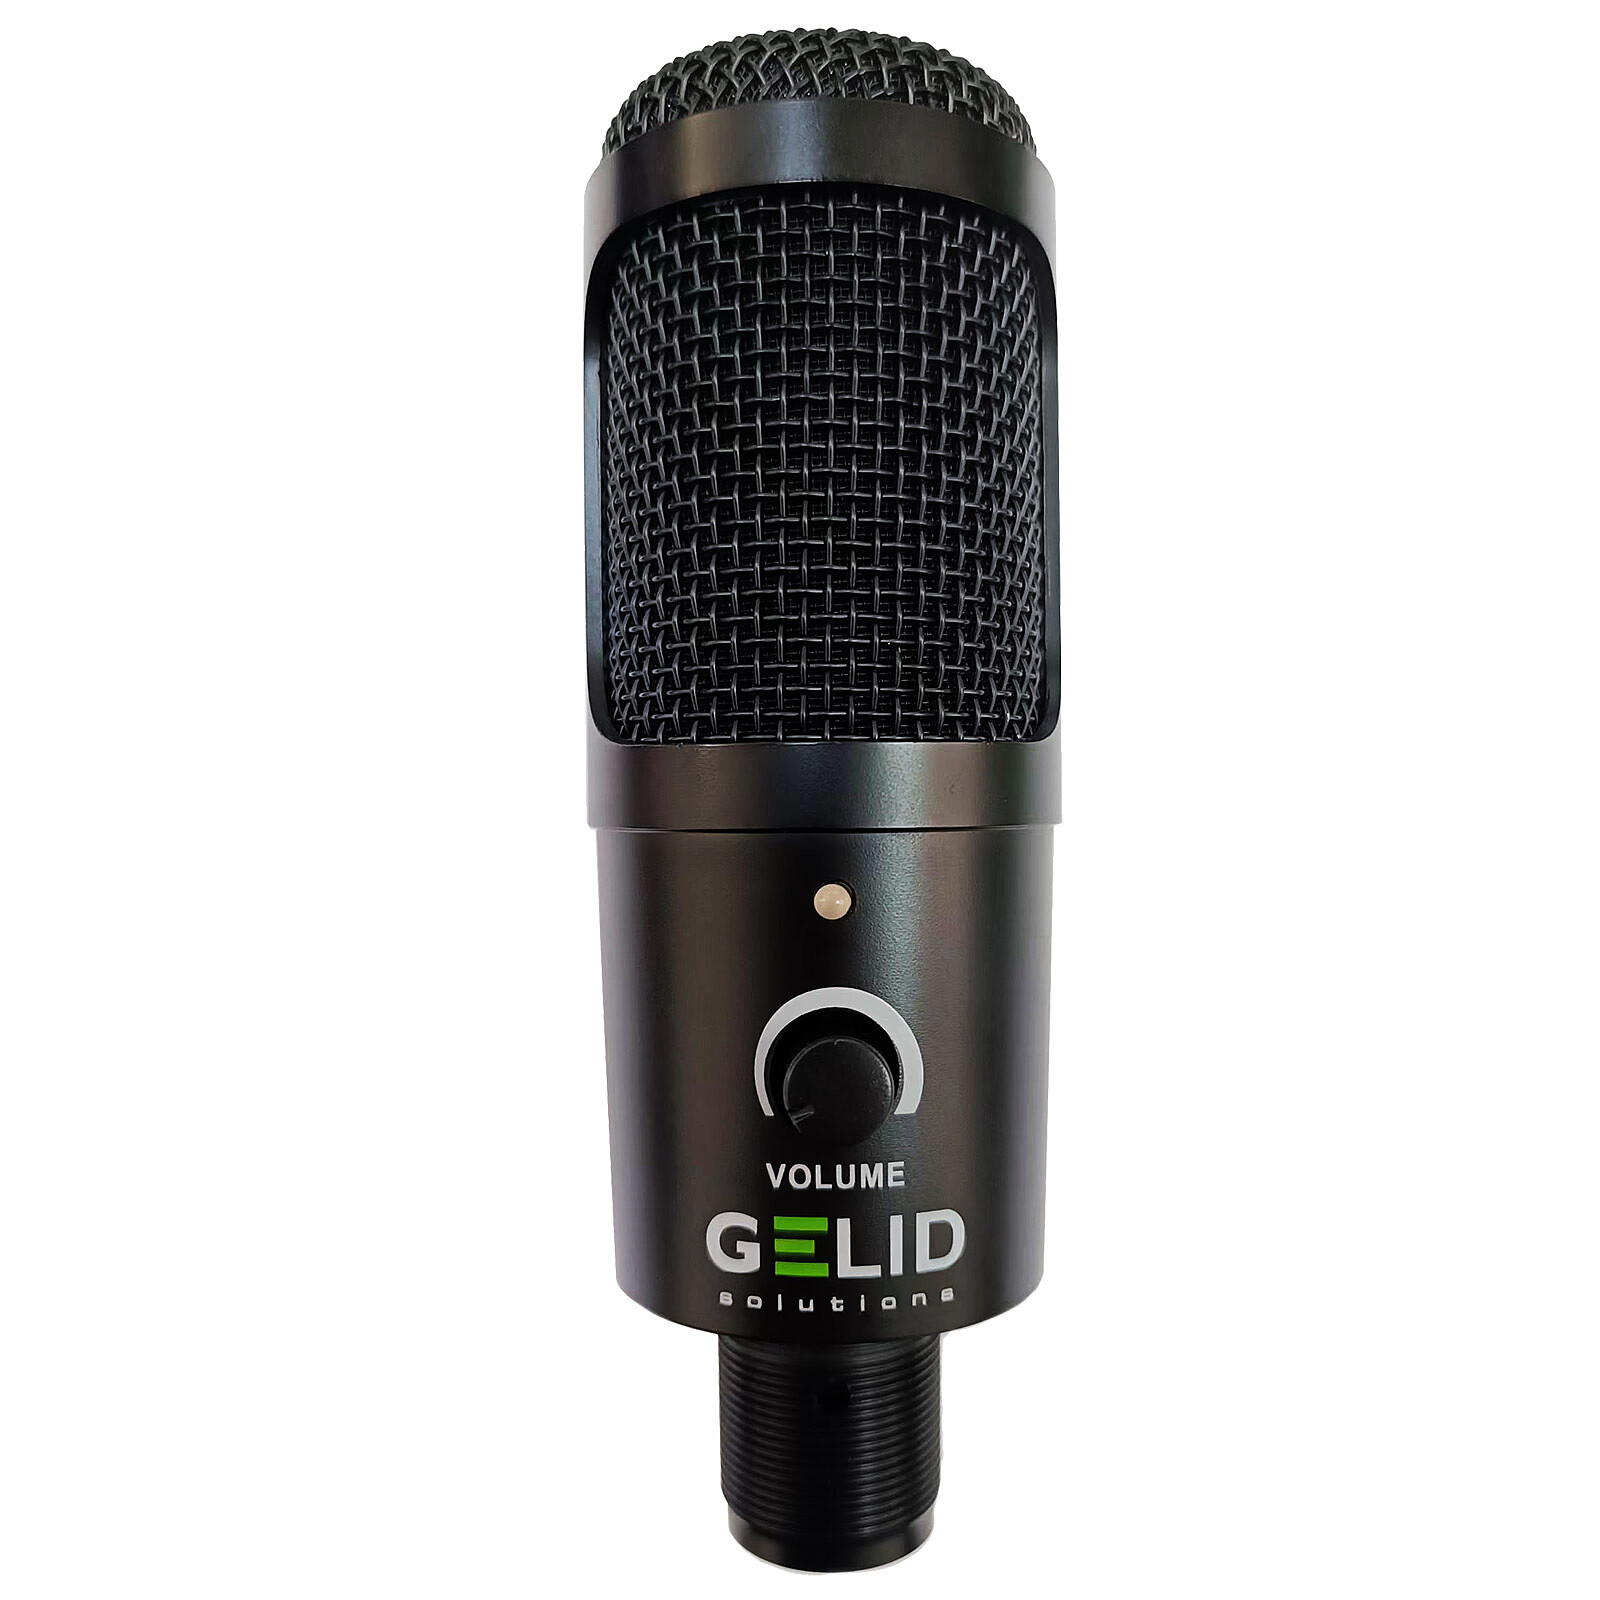 Speedlink Volity Ready - Microphone - Garantie 3 ans LDLC